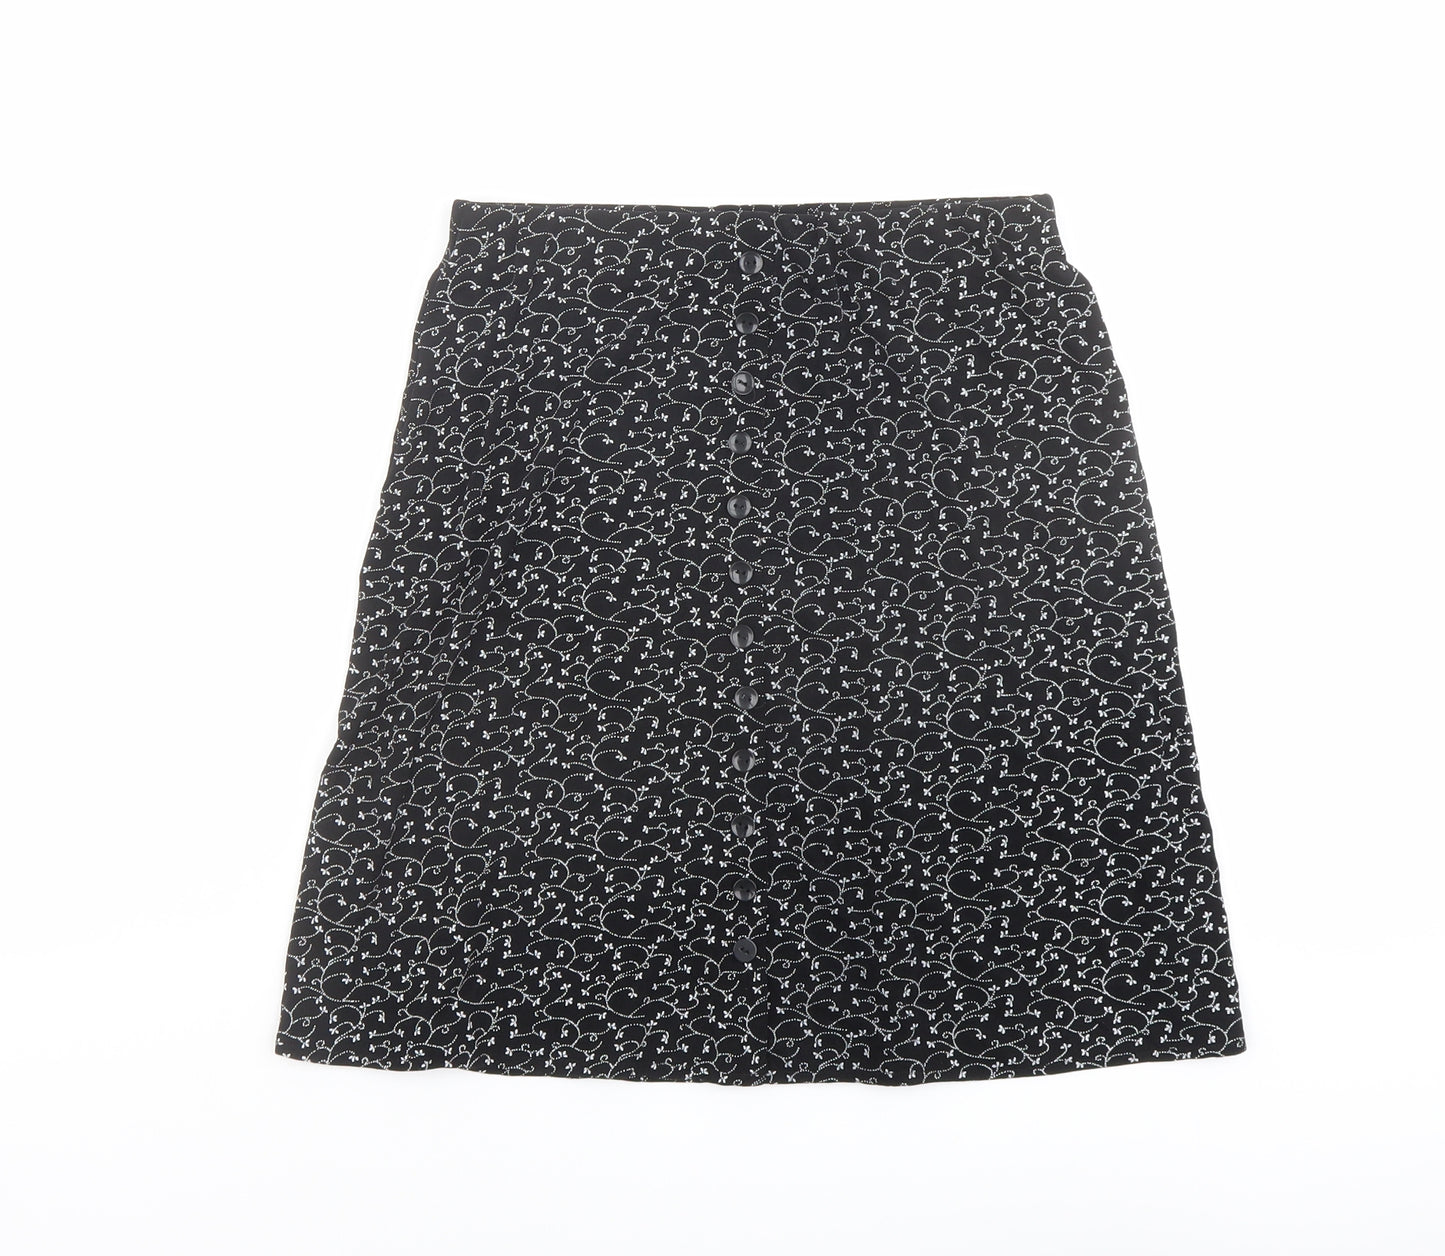 Briggs New York Womens Black Floral Nylon A-Line Skirt Size S